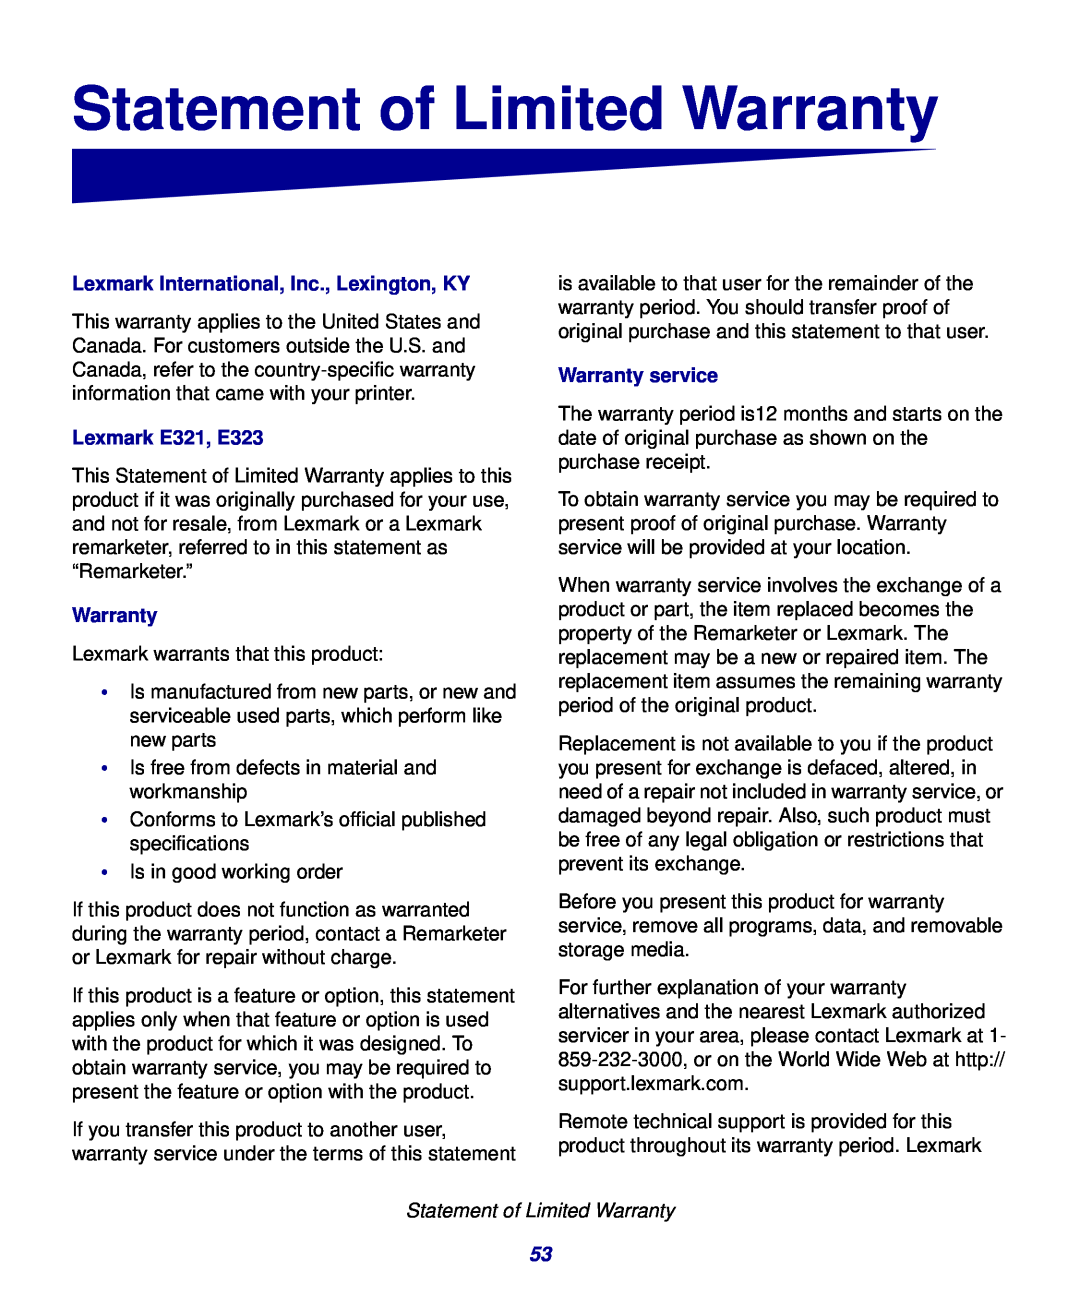 Lexmark Statement of Limited Warranty, Lexmark International, Inc., Lexington, KY, Lexmark E321, E323, Warranty service 